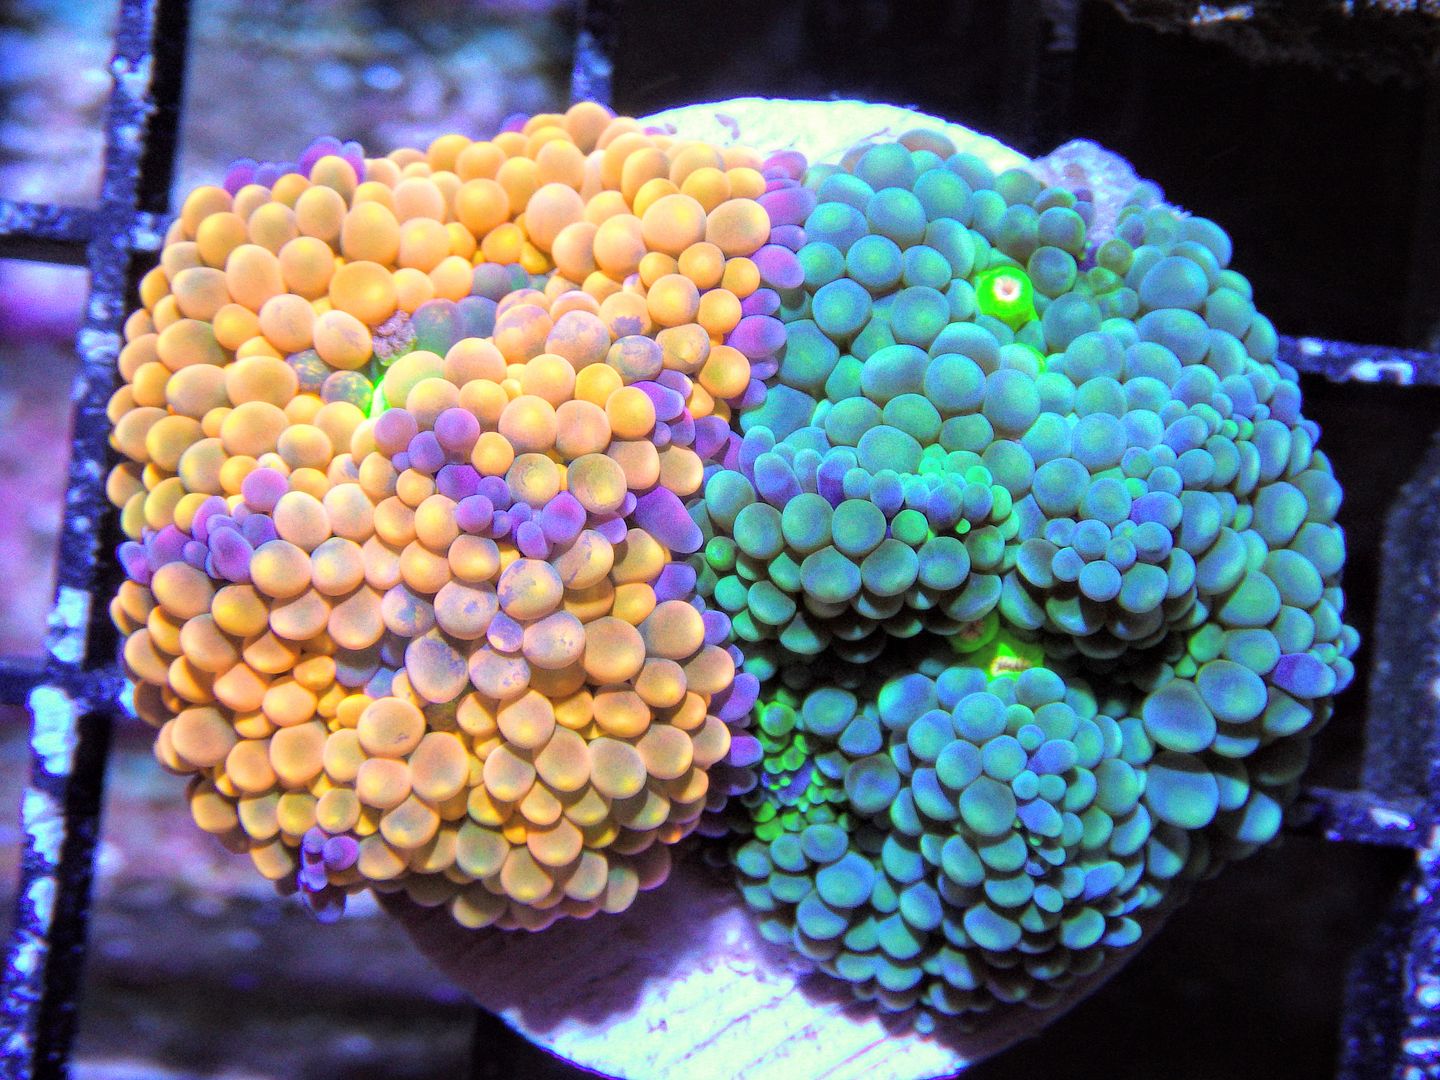 RIMG85793 zpsewf1mjrg - New Mushrooms & Pieces of The Reef